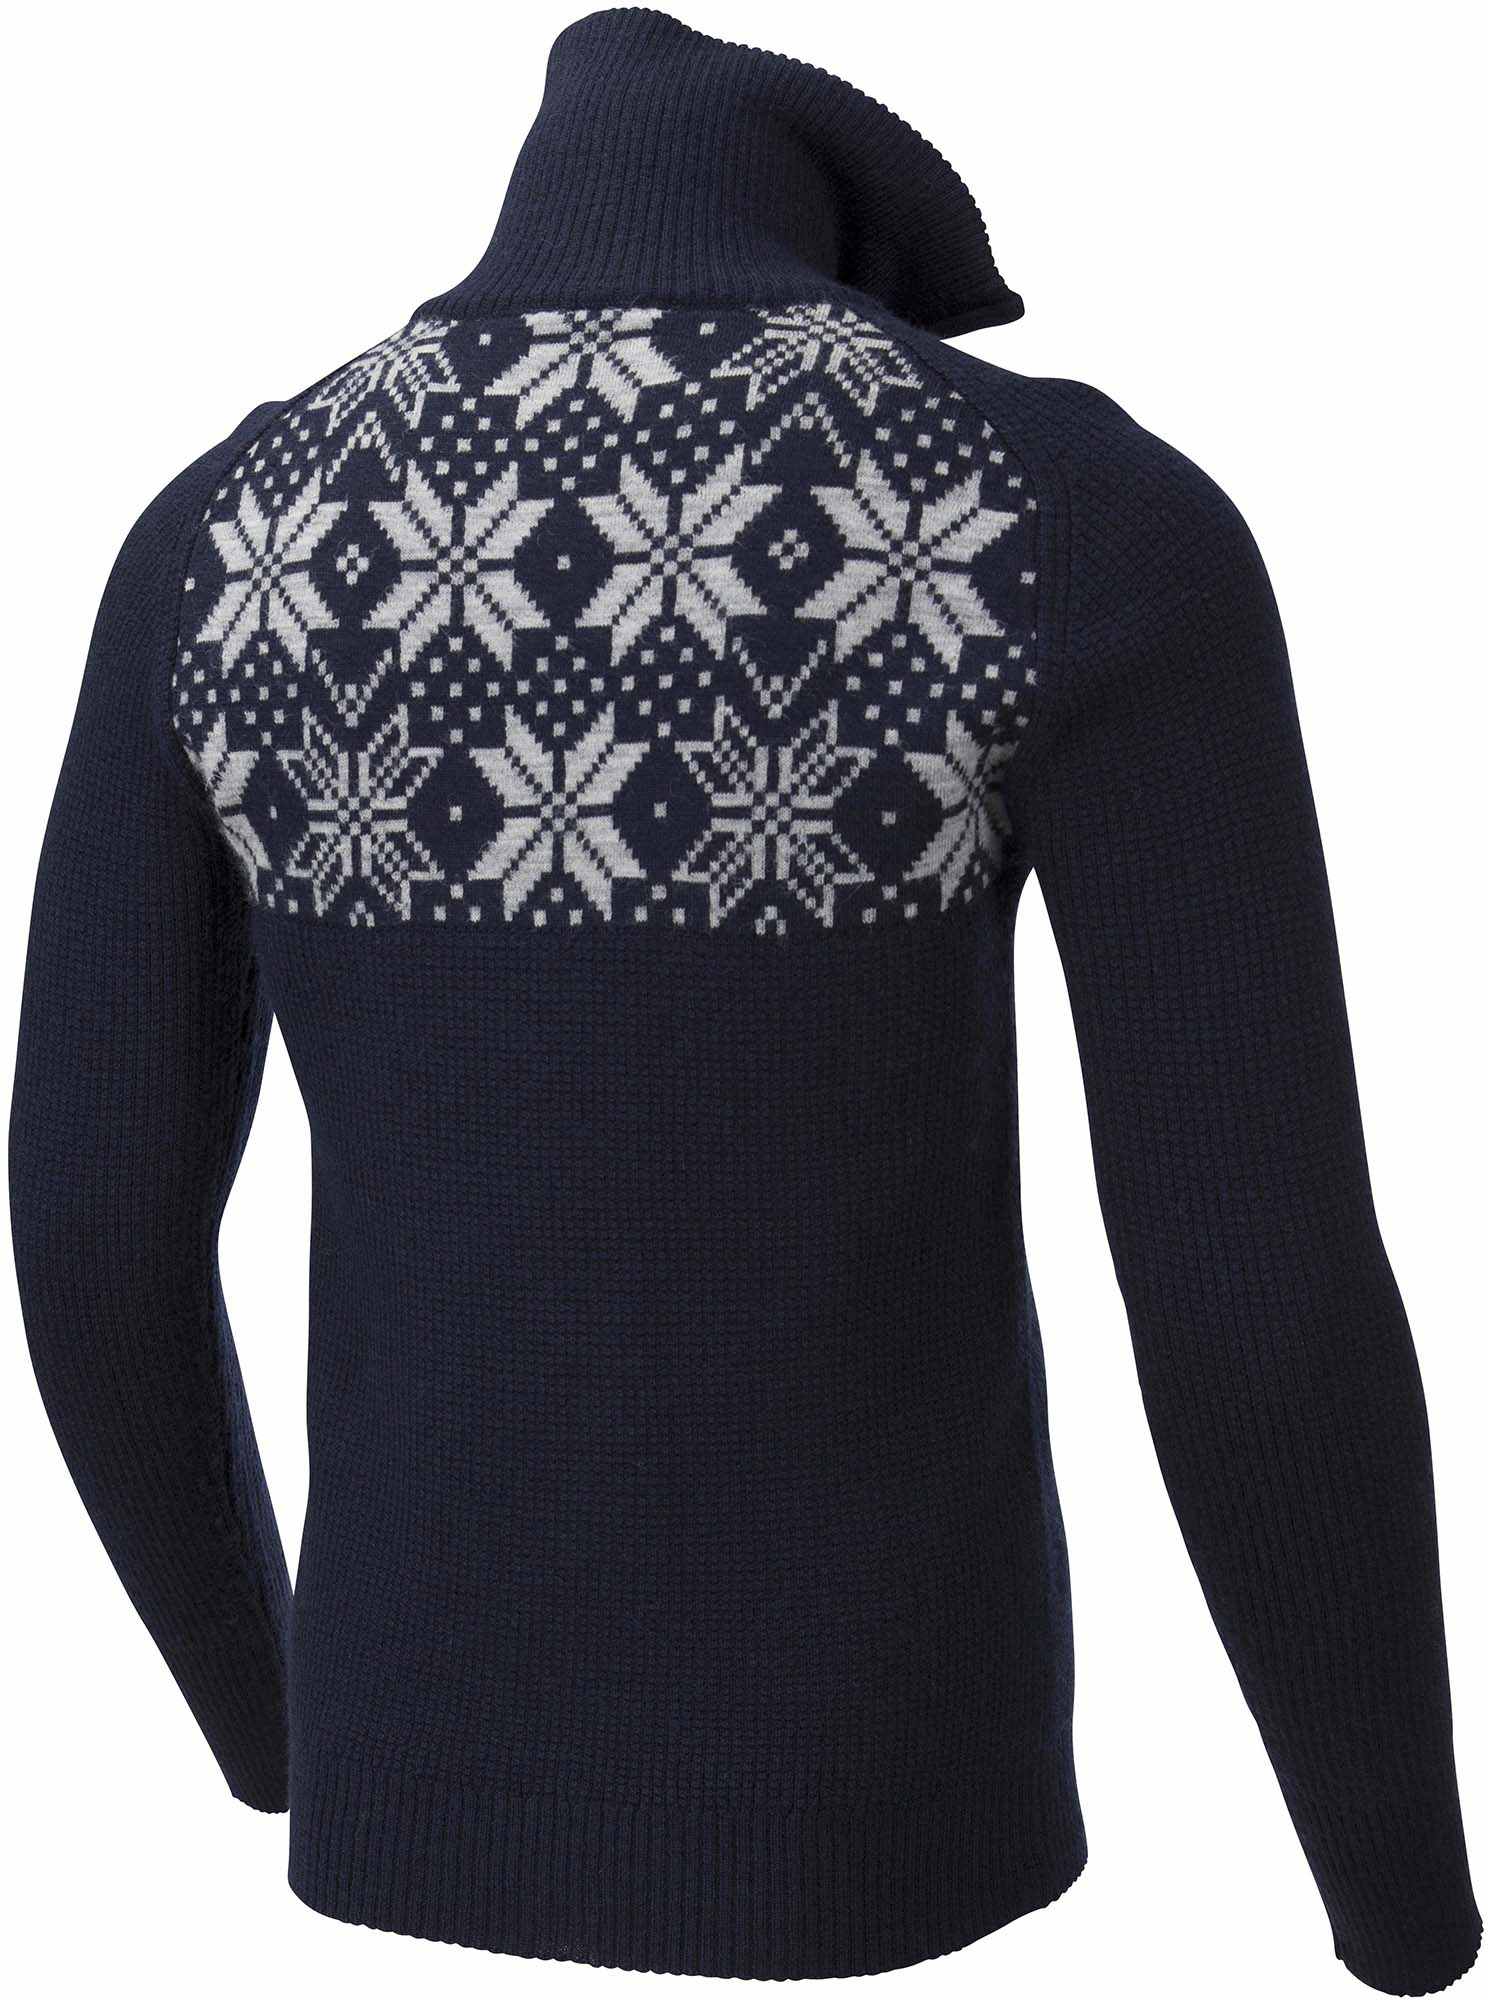 Men’s sweater